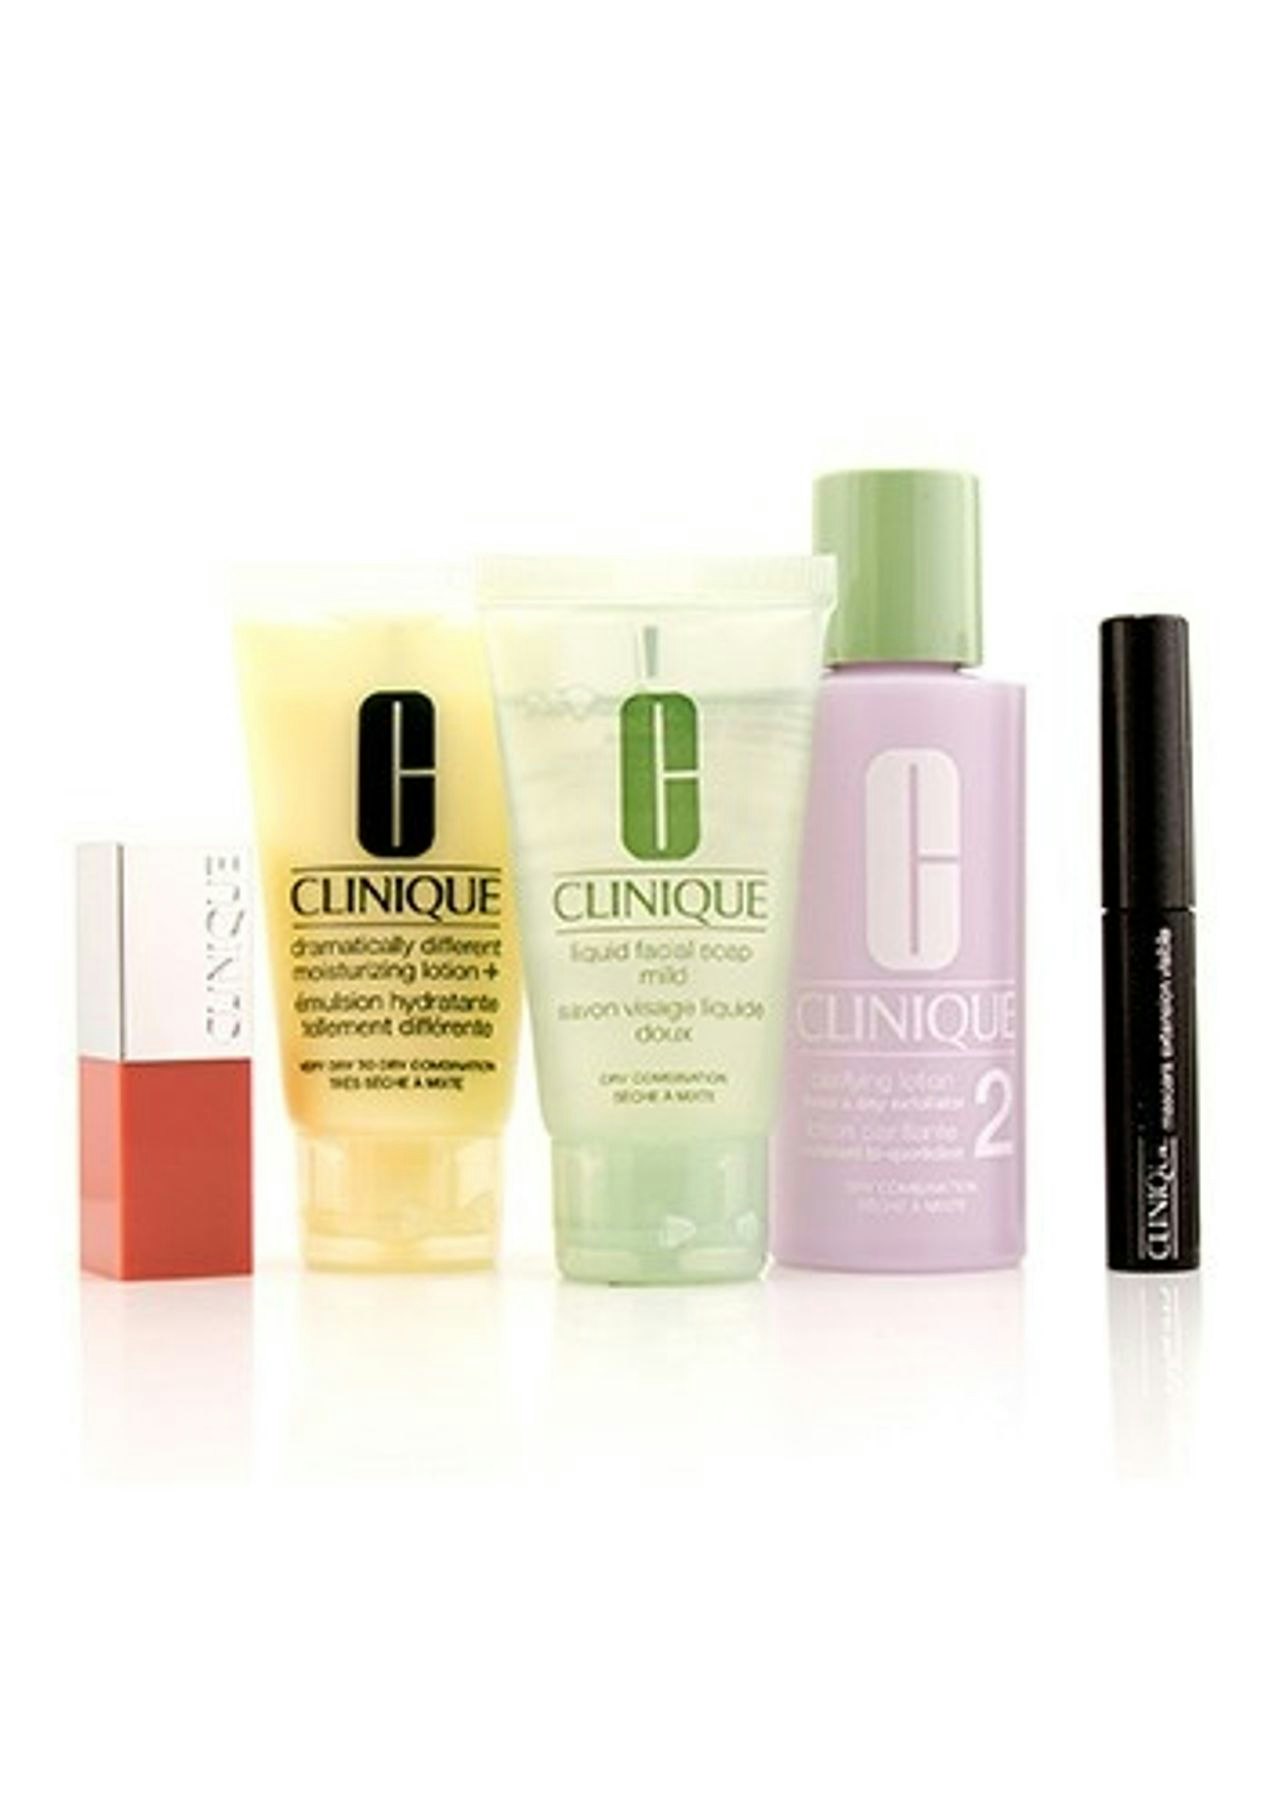 Step skins. Clinique Liquid facial Soap mild жидкое мыло для лица для нормальной и сухой кожи. Deep 06 Clinique.